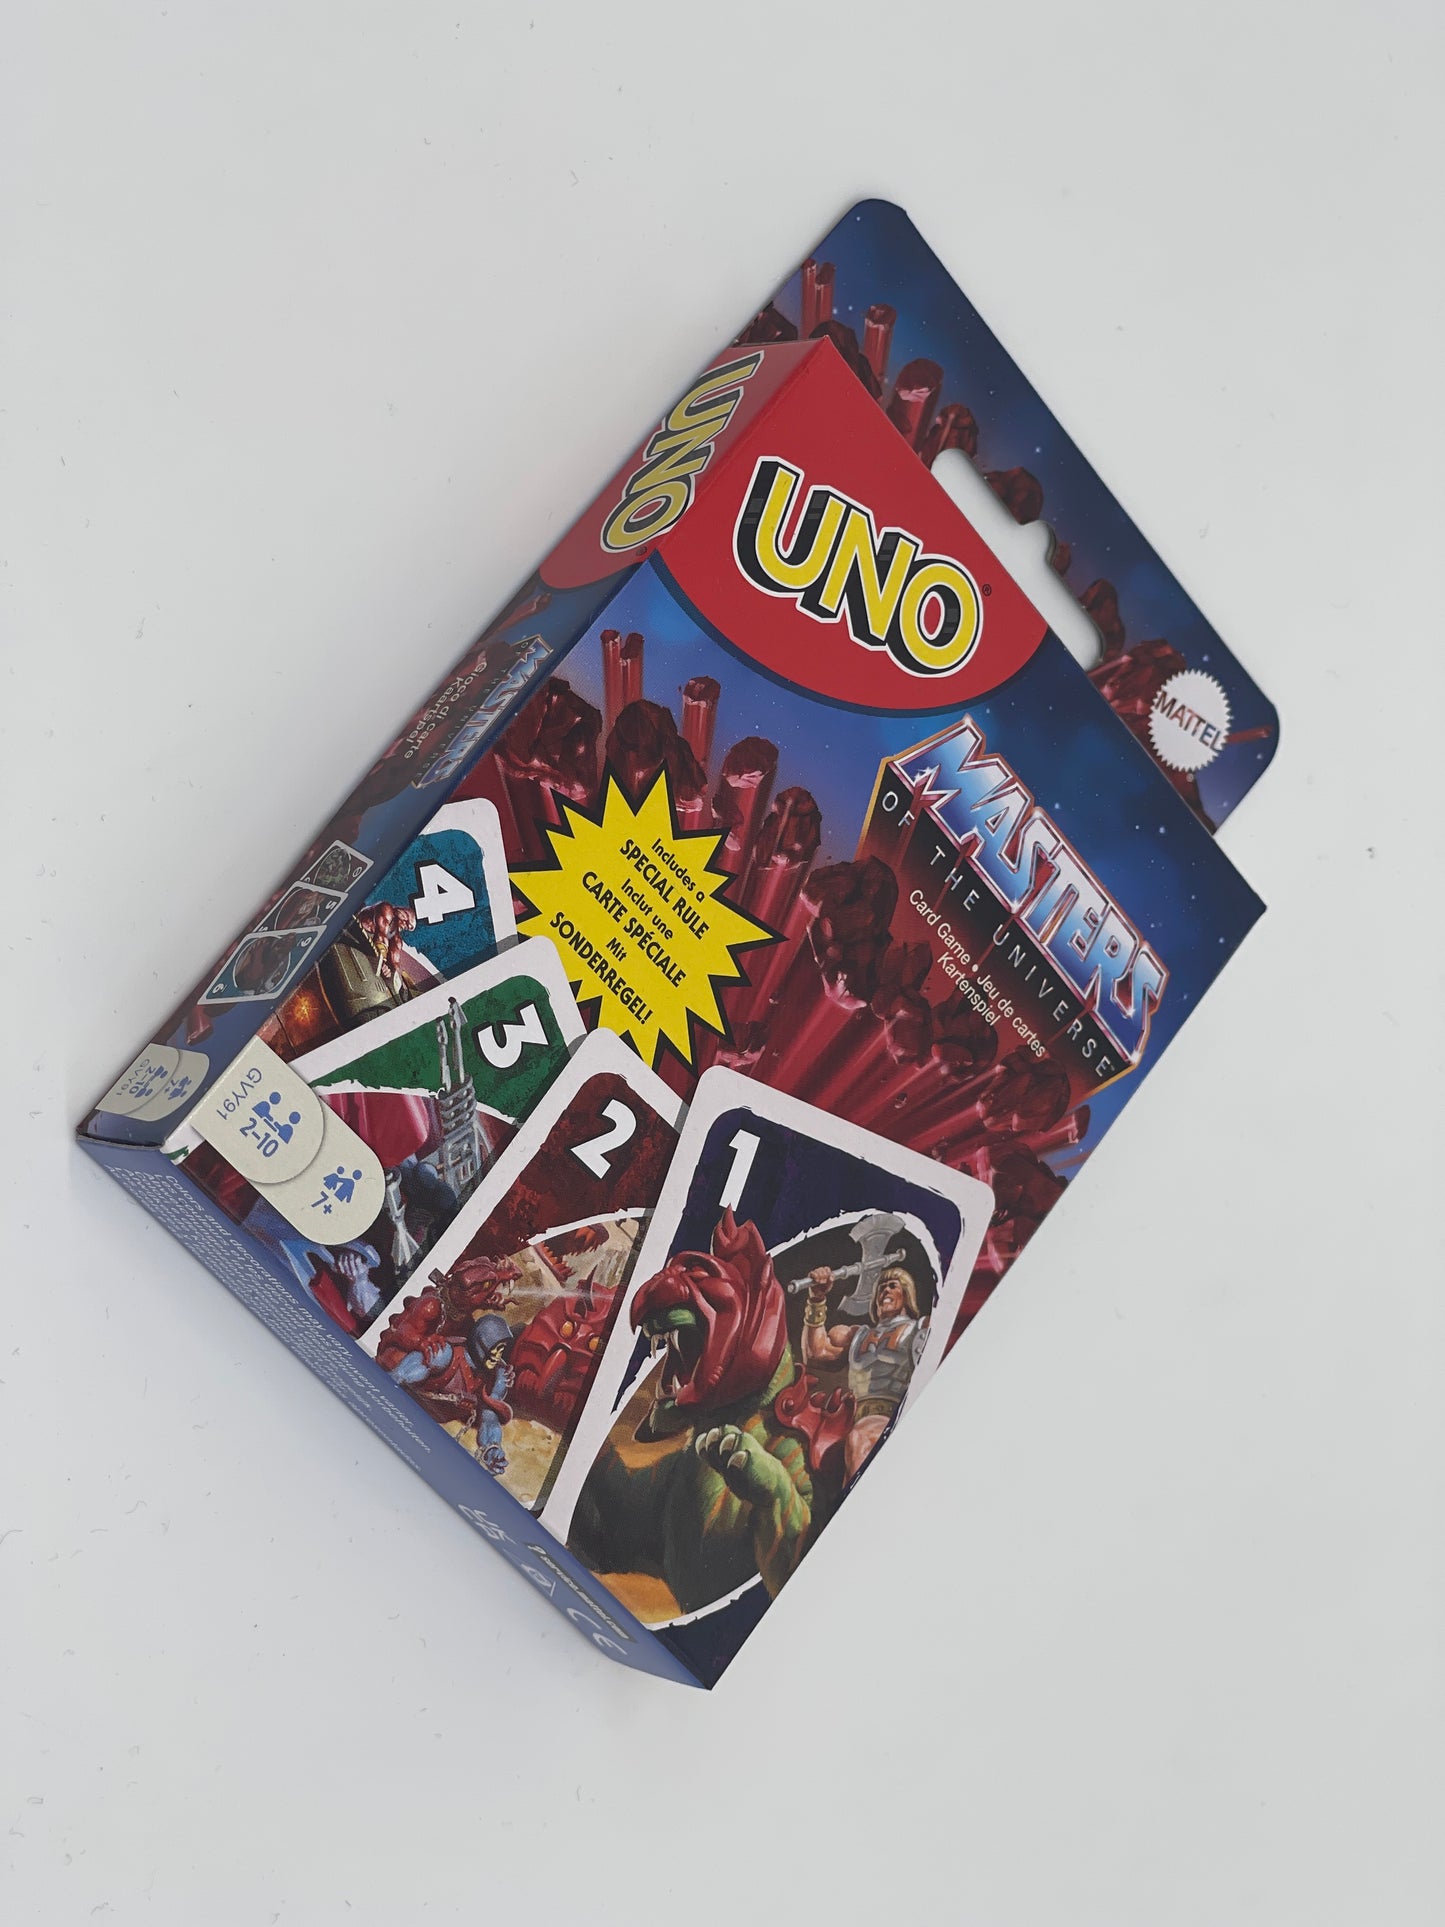 Masters of the Universe UNO mit Sonderregel - EU Version Mattel (2021)